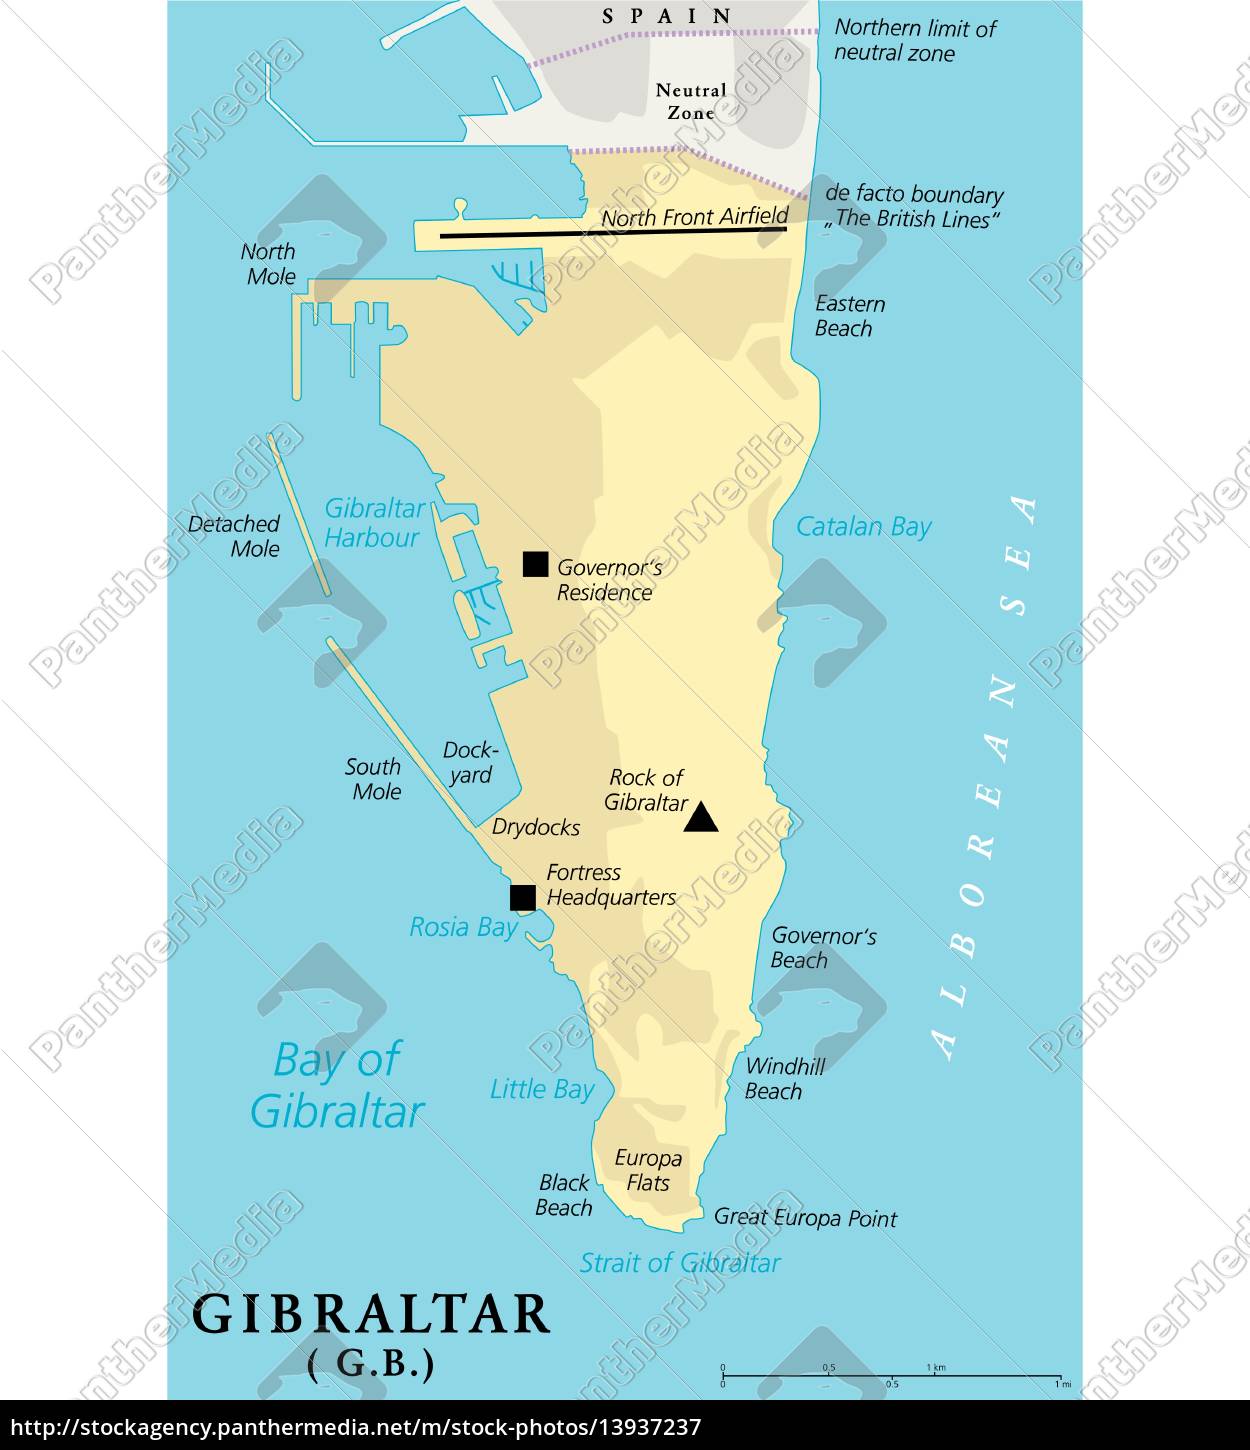 Gibraltar Kort gibraltar politisk kort   Royalty Free Image   #13937237  Gibraltar Kort